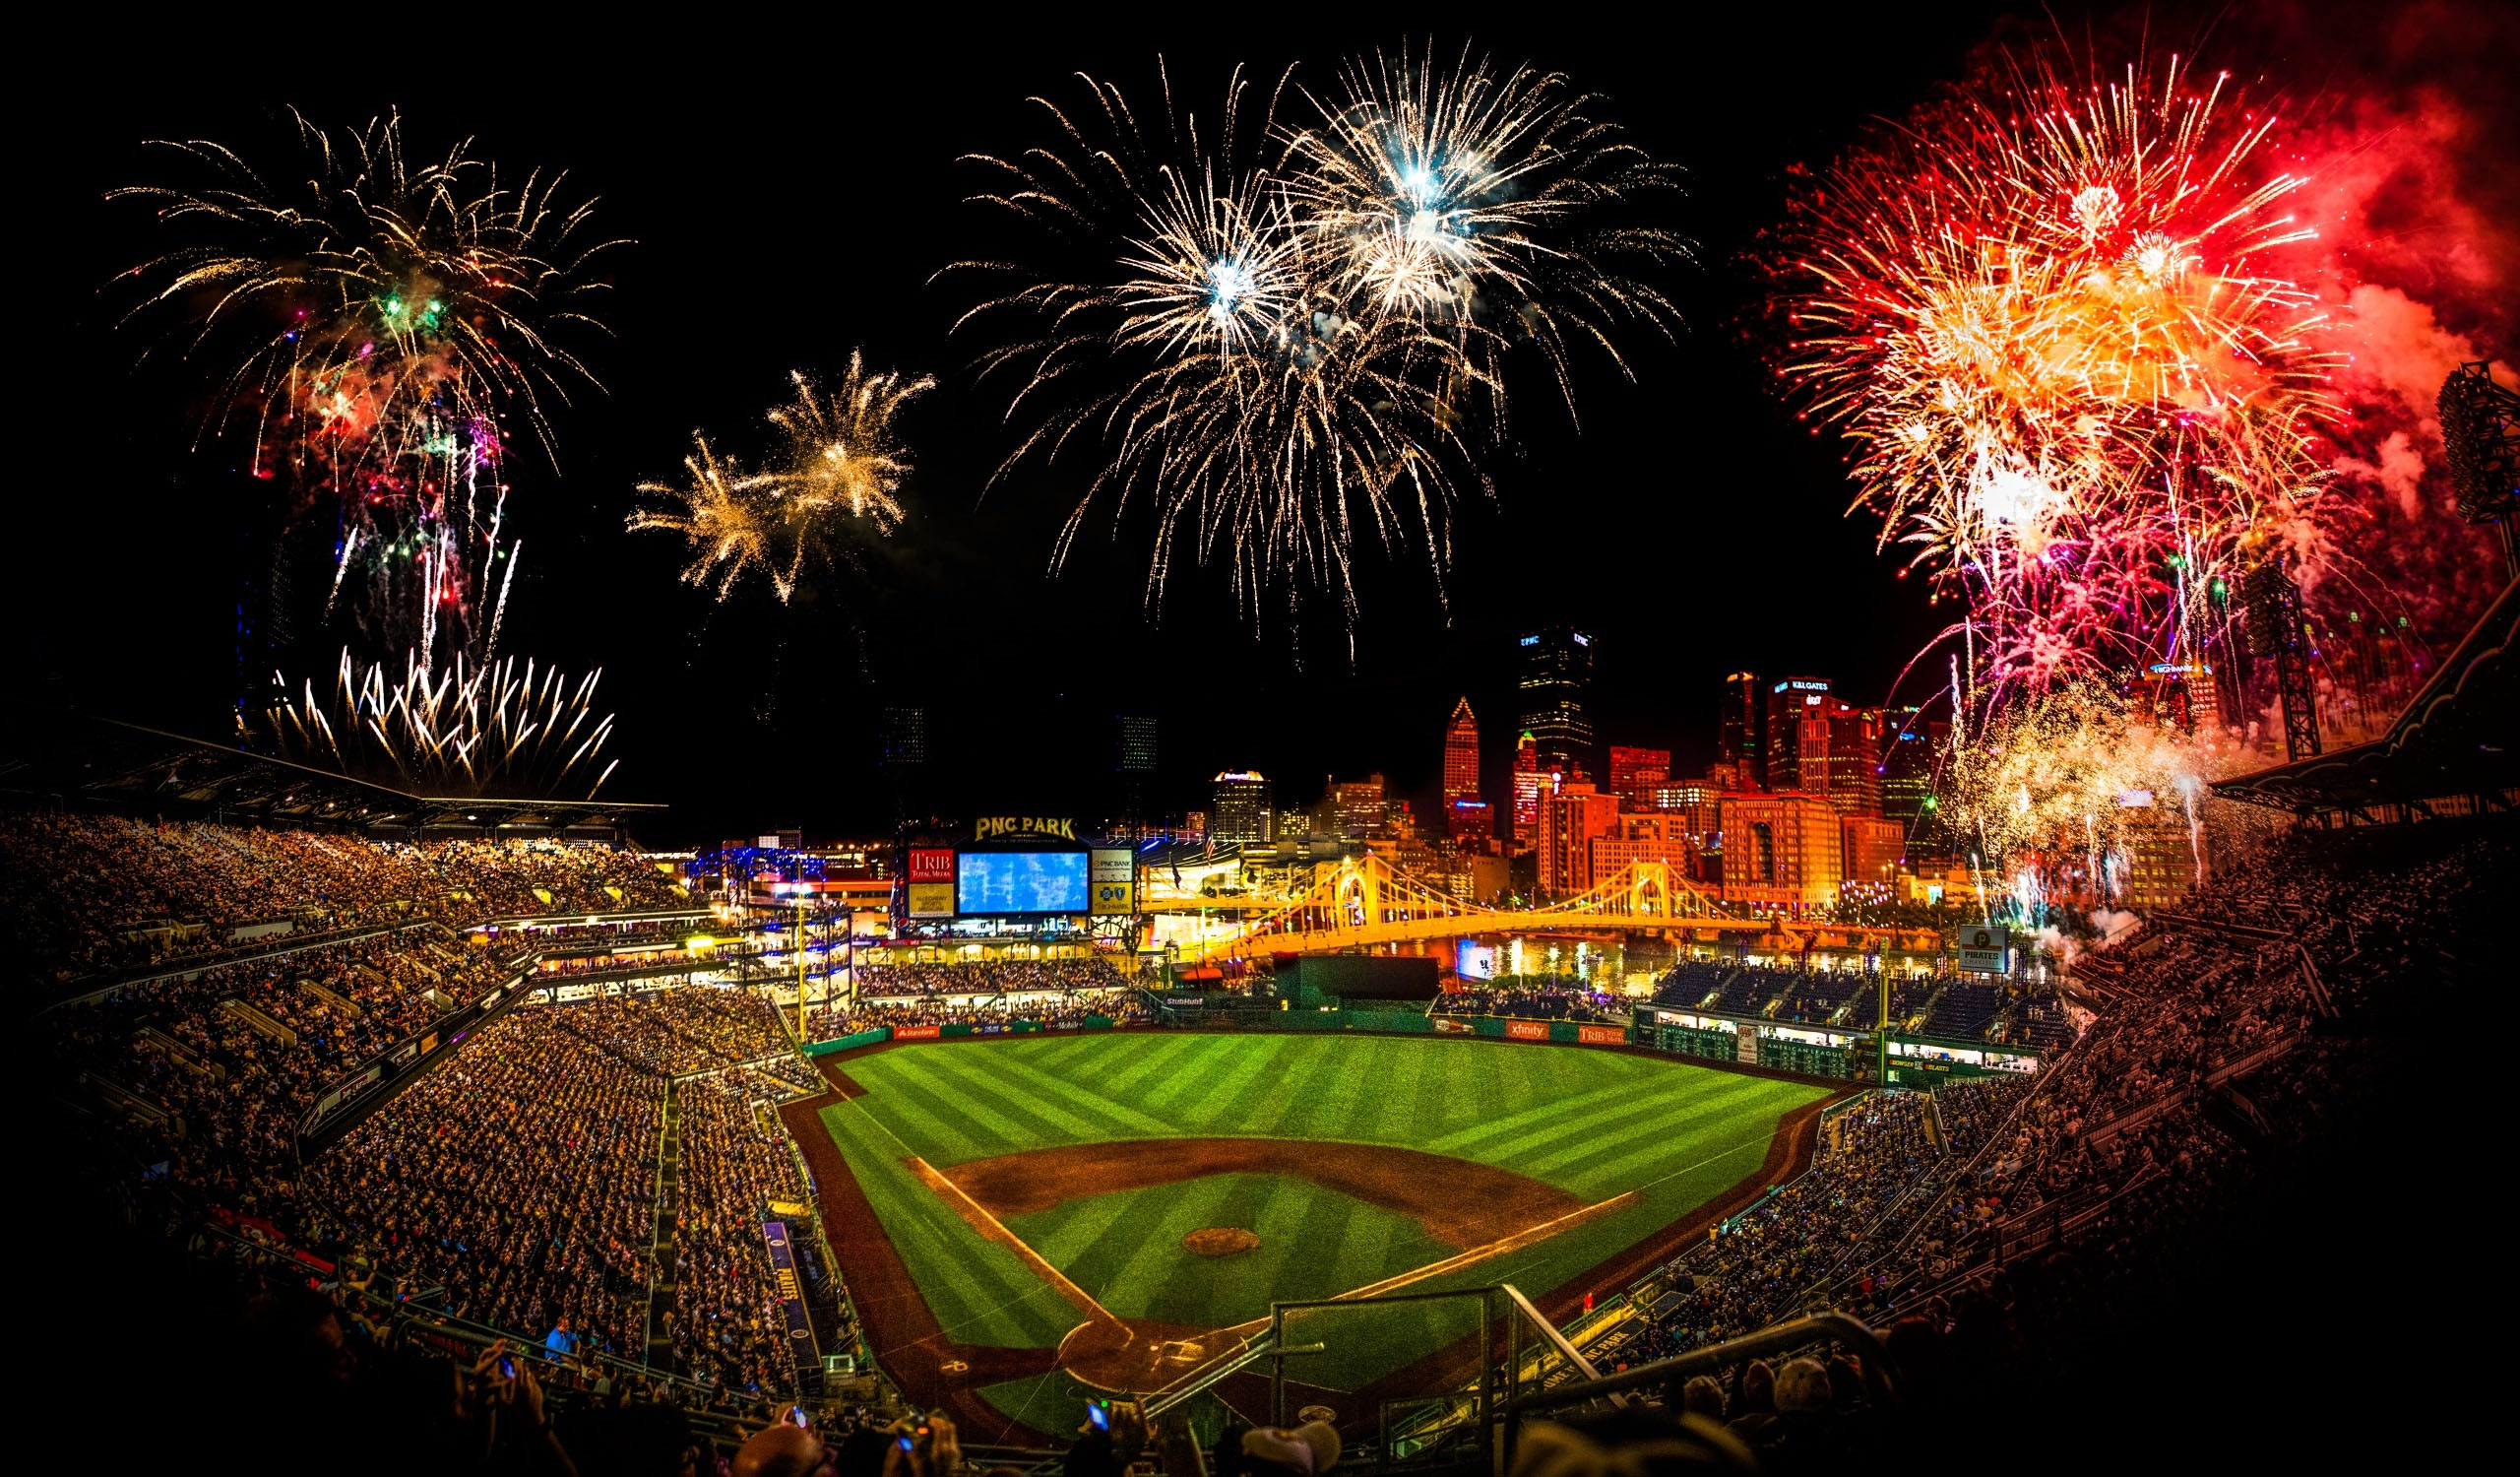 hi-res ballpark background with fireworks